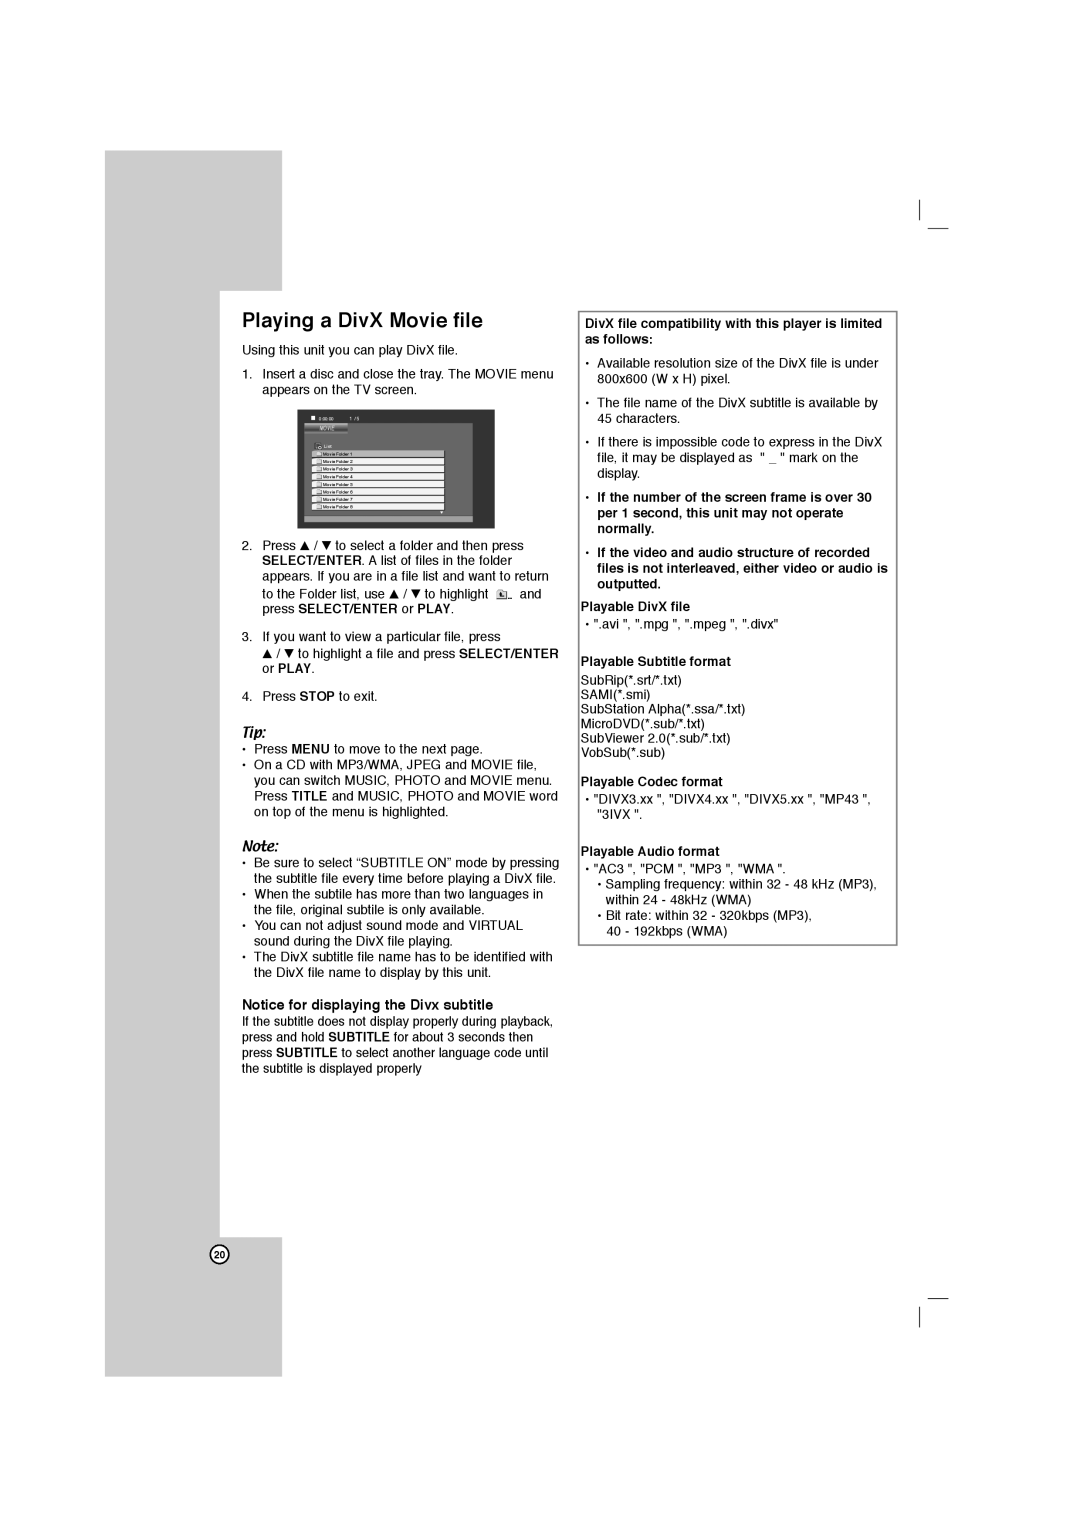 LG Electronics FBS162V, LFD750 Notice for displaying the Divx subtitle, Playable DivX file, Playable Subtitle format 